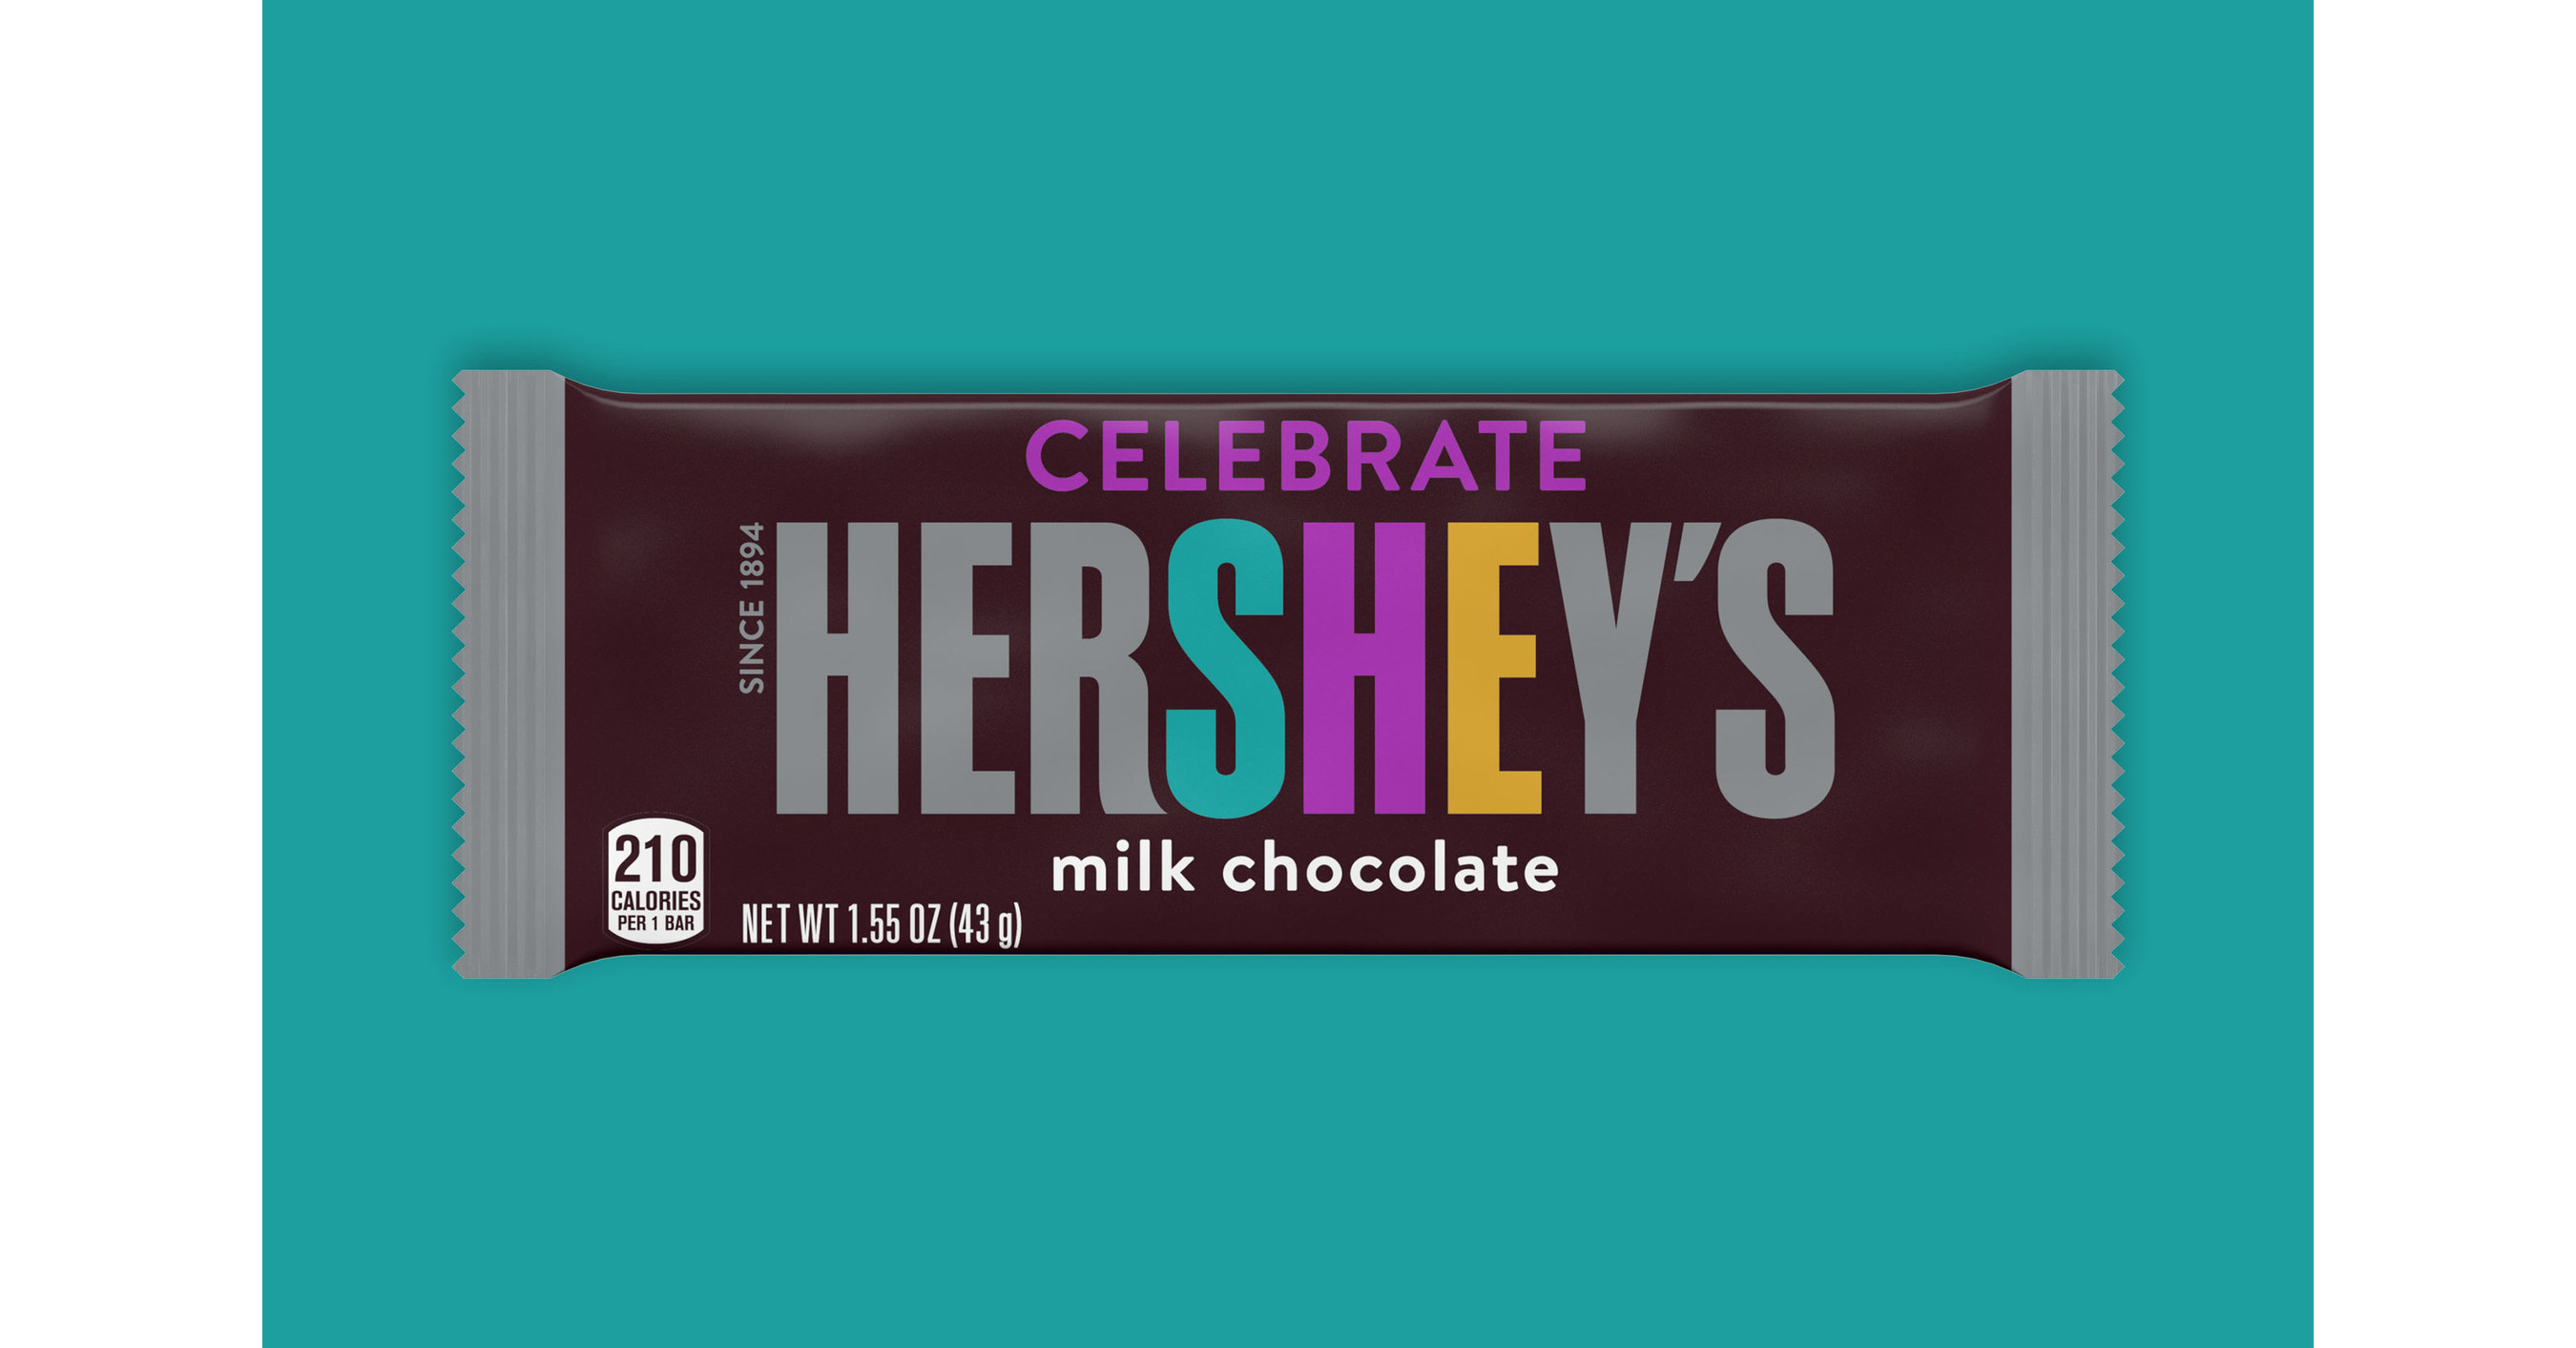 Hershey's Creates Chocolate Bar to Celebrate All Women and Girls Everywhere